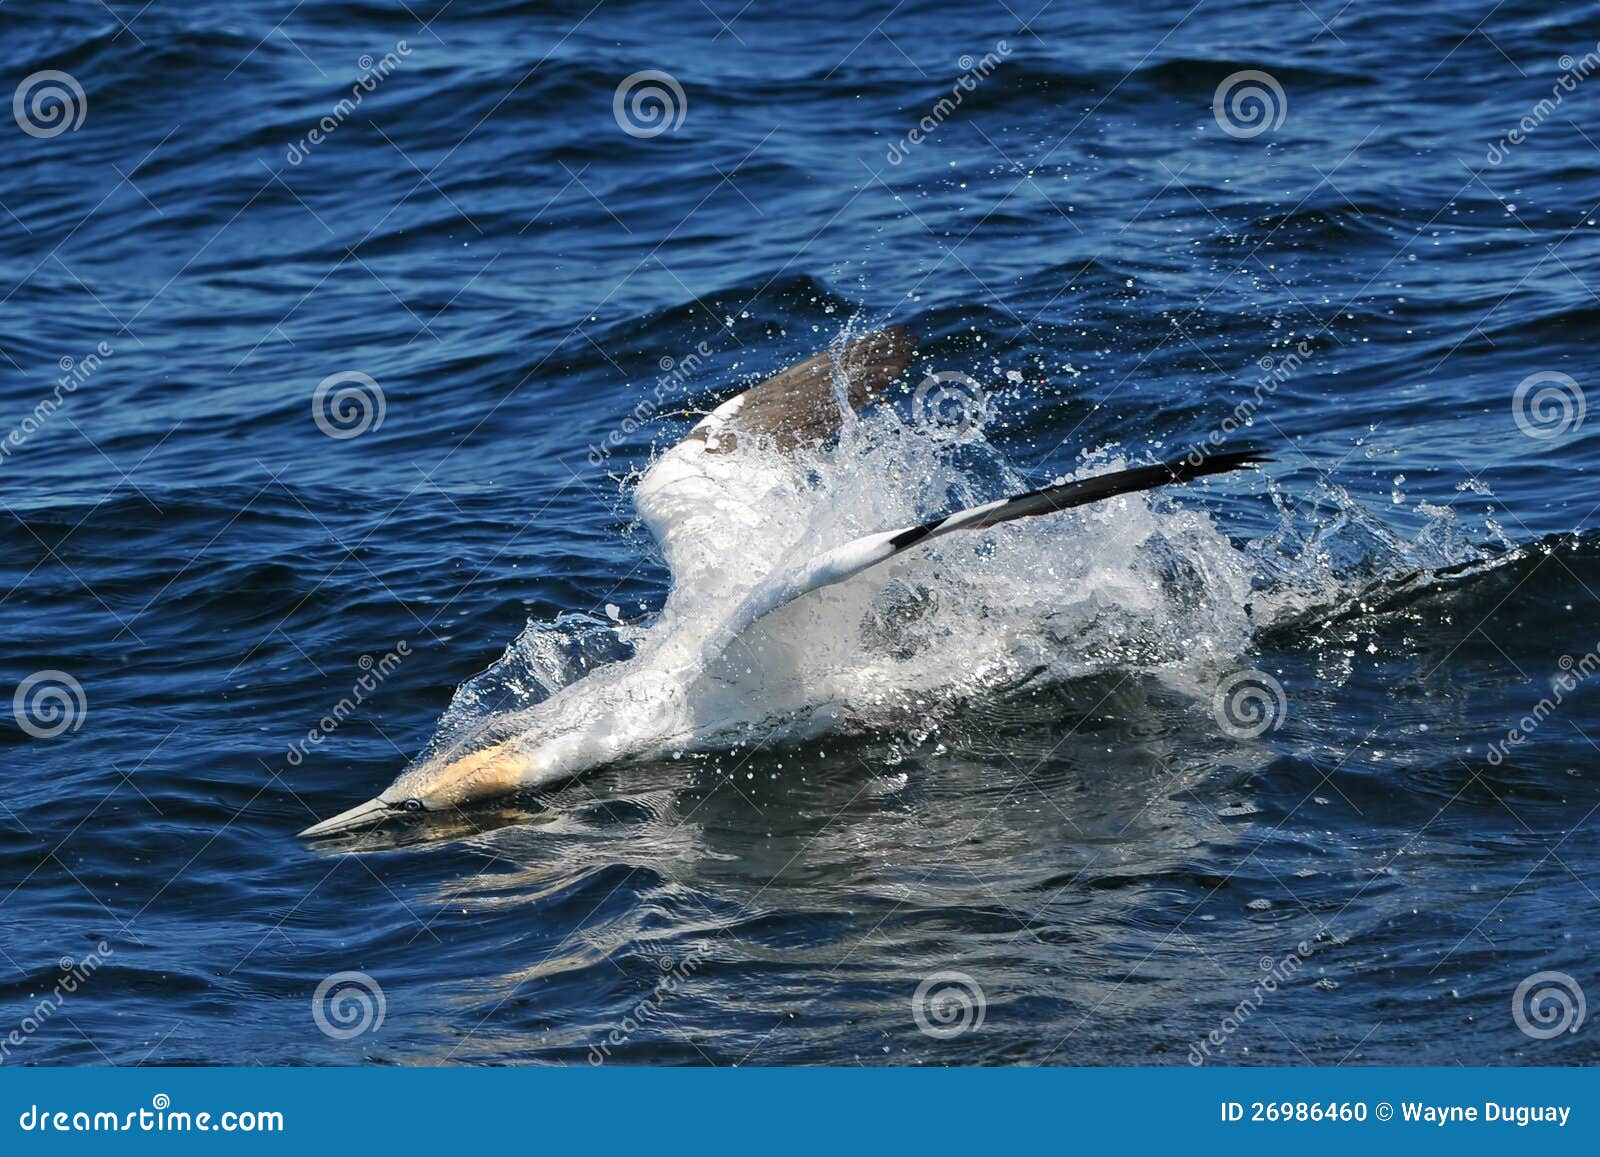 northern gannet diving